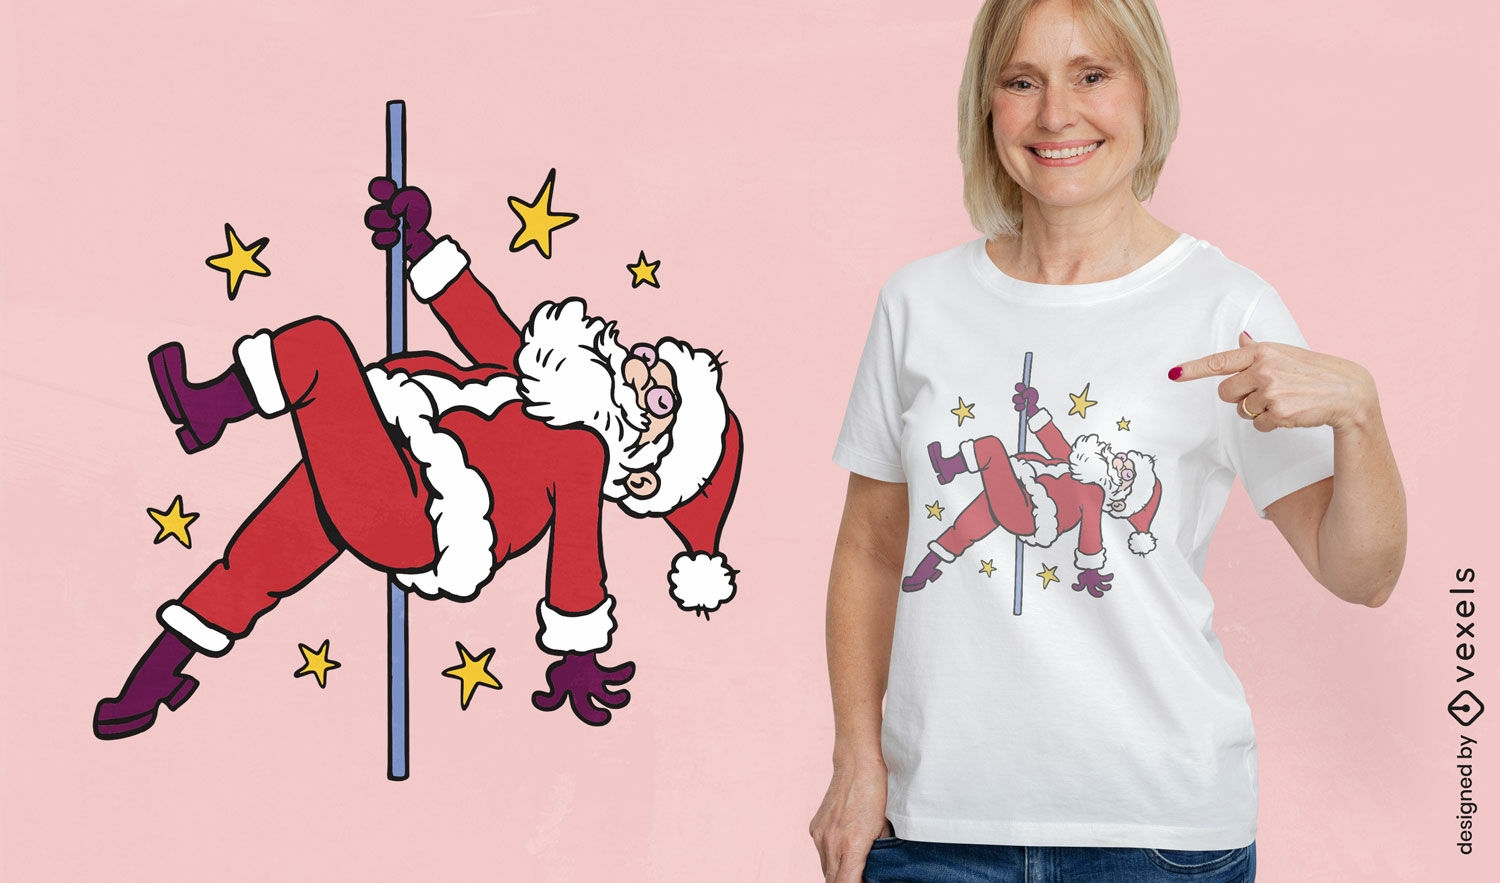 Diseño de camiseta de baile navideño de Papá Noel.